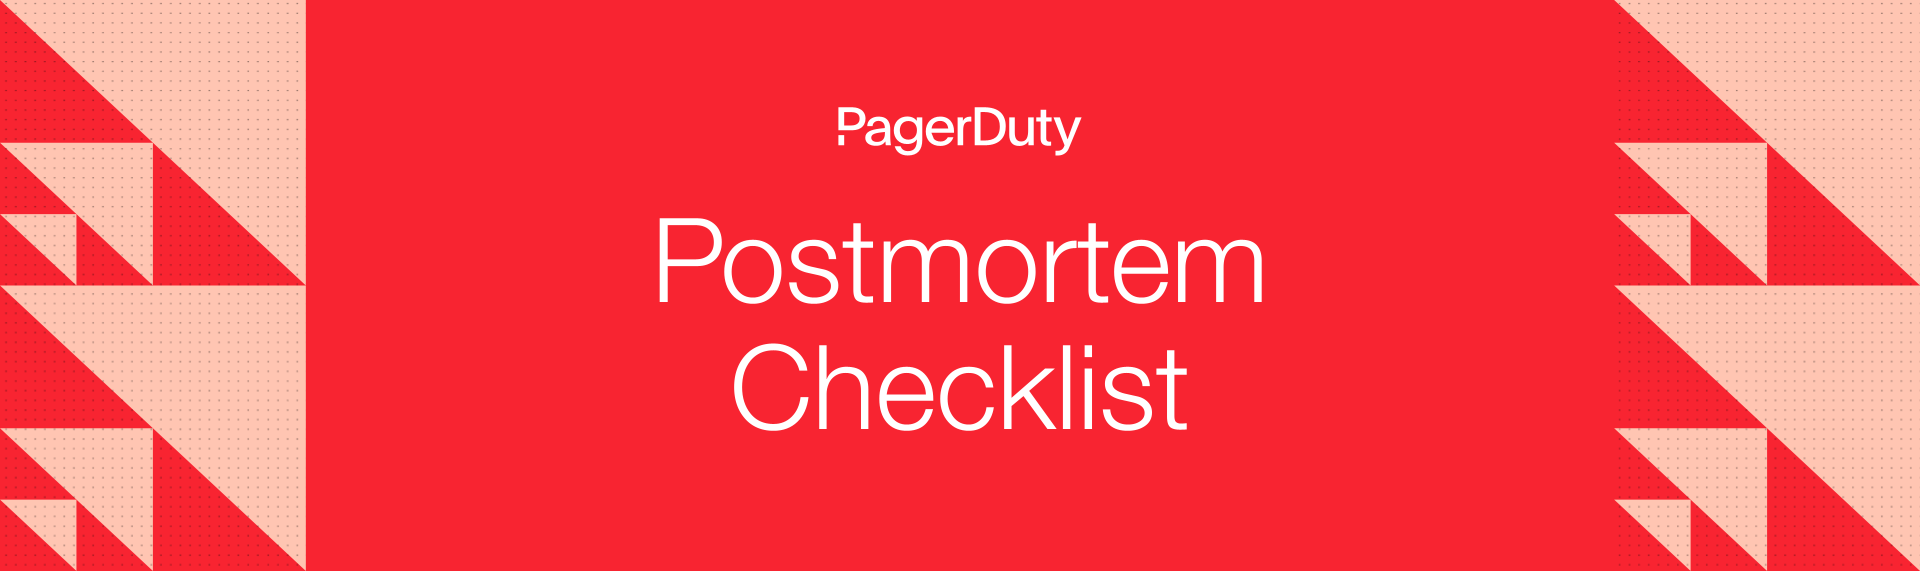 Postmortems Checklist